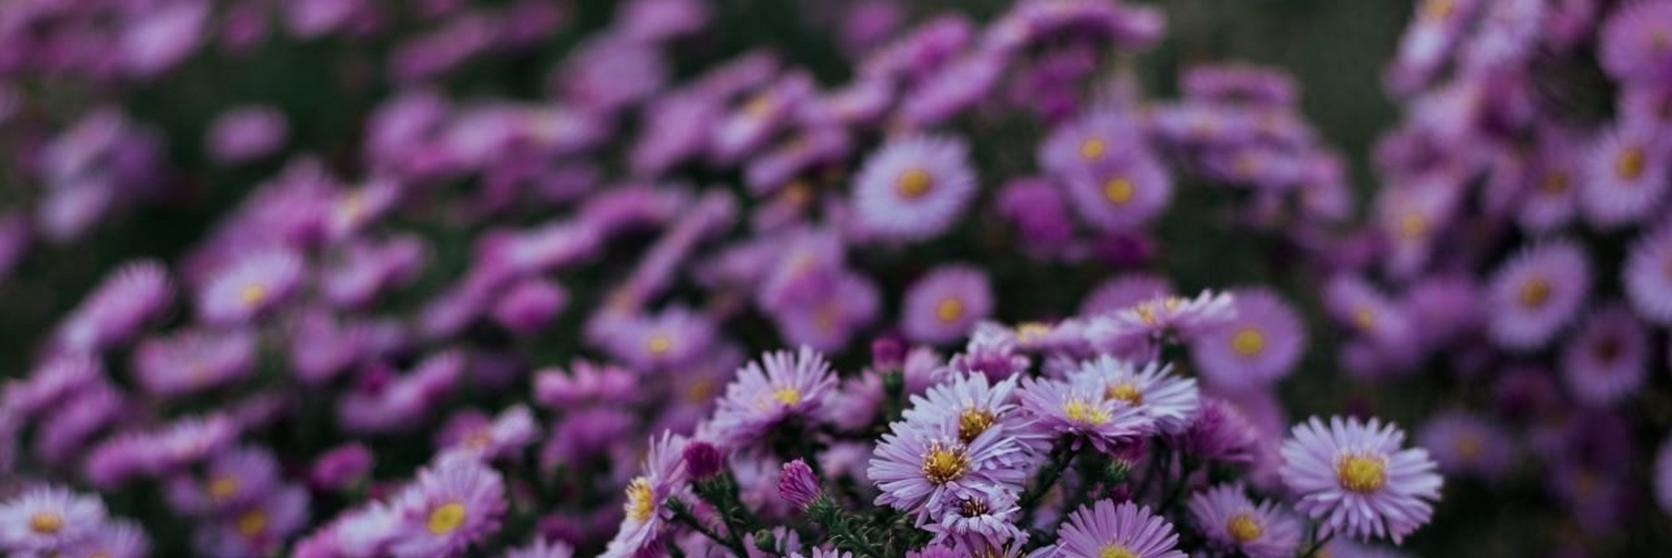 aster-purple-flowers-